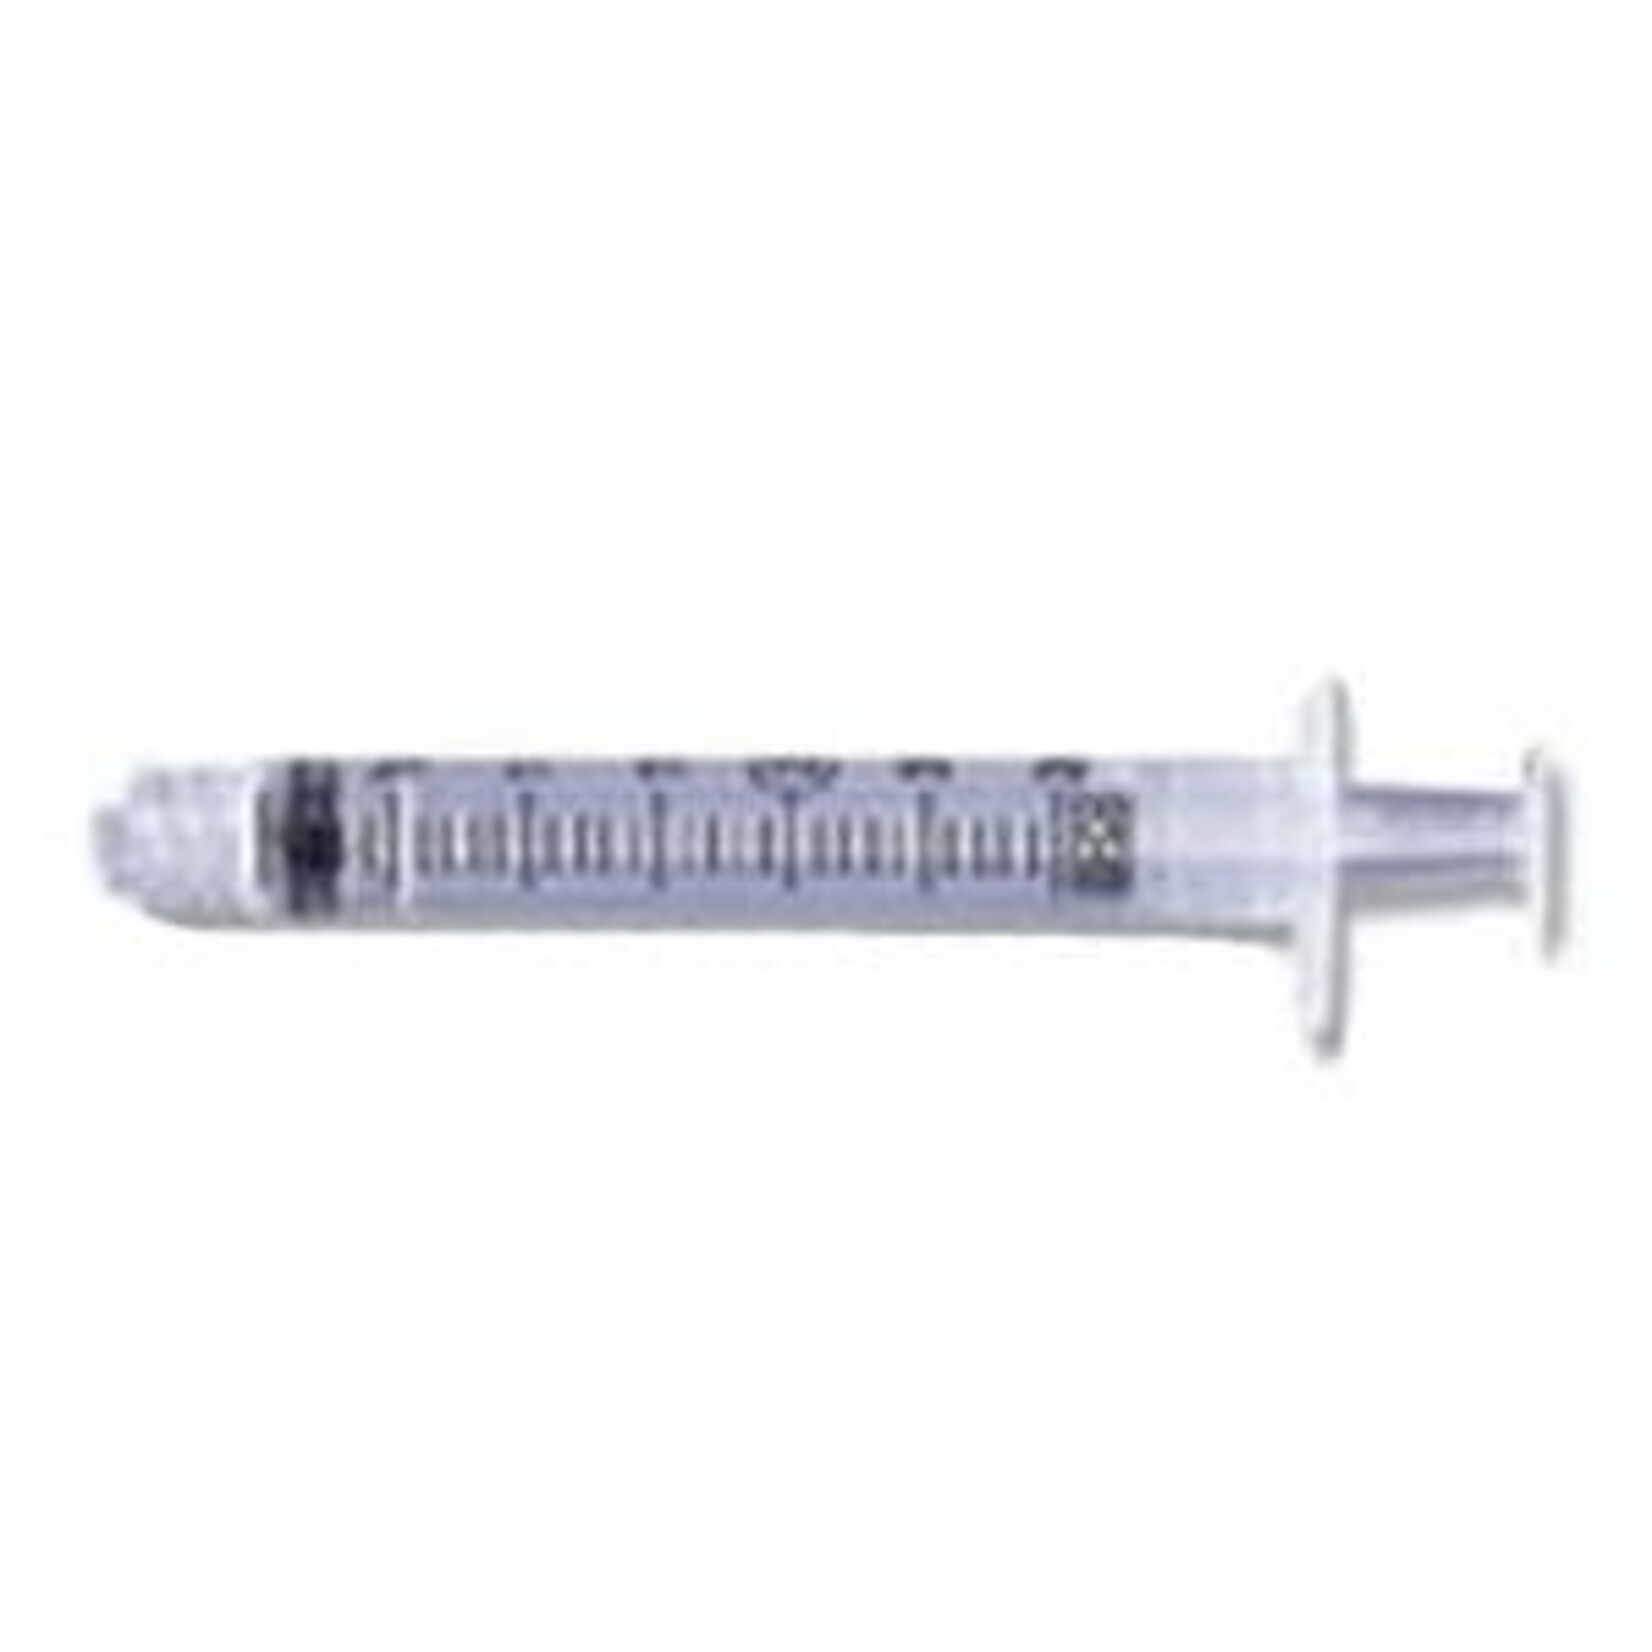 BD Luer-Lok™ Tip Syringe, Sterile, Latex-Free, 5mL in 1/5mL Graduations